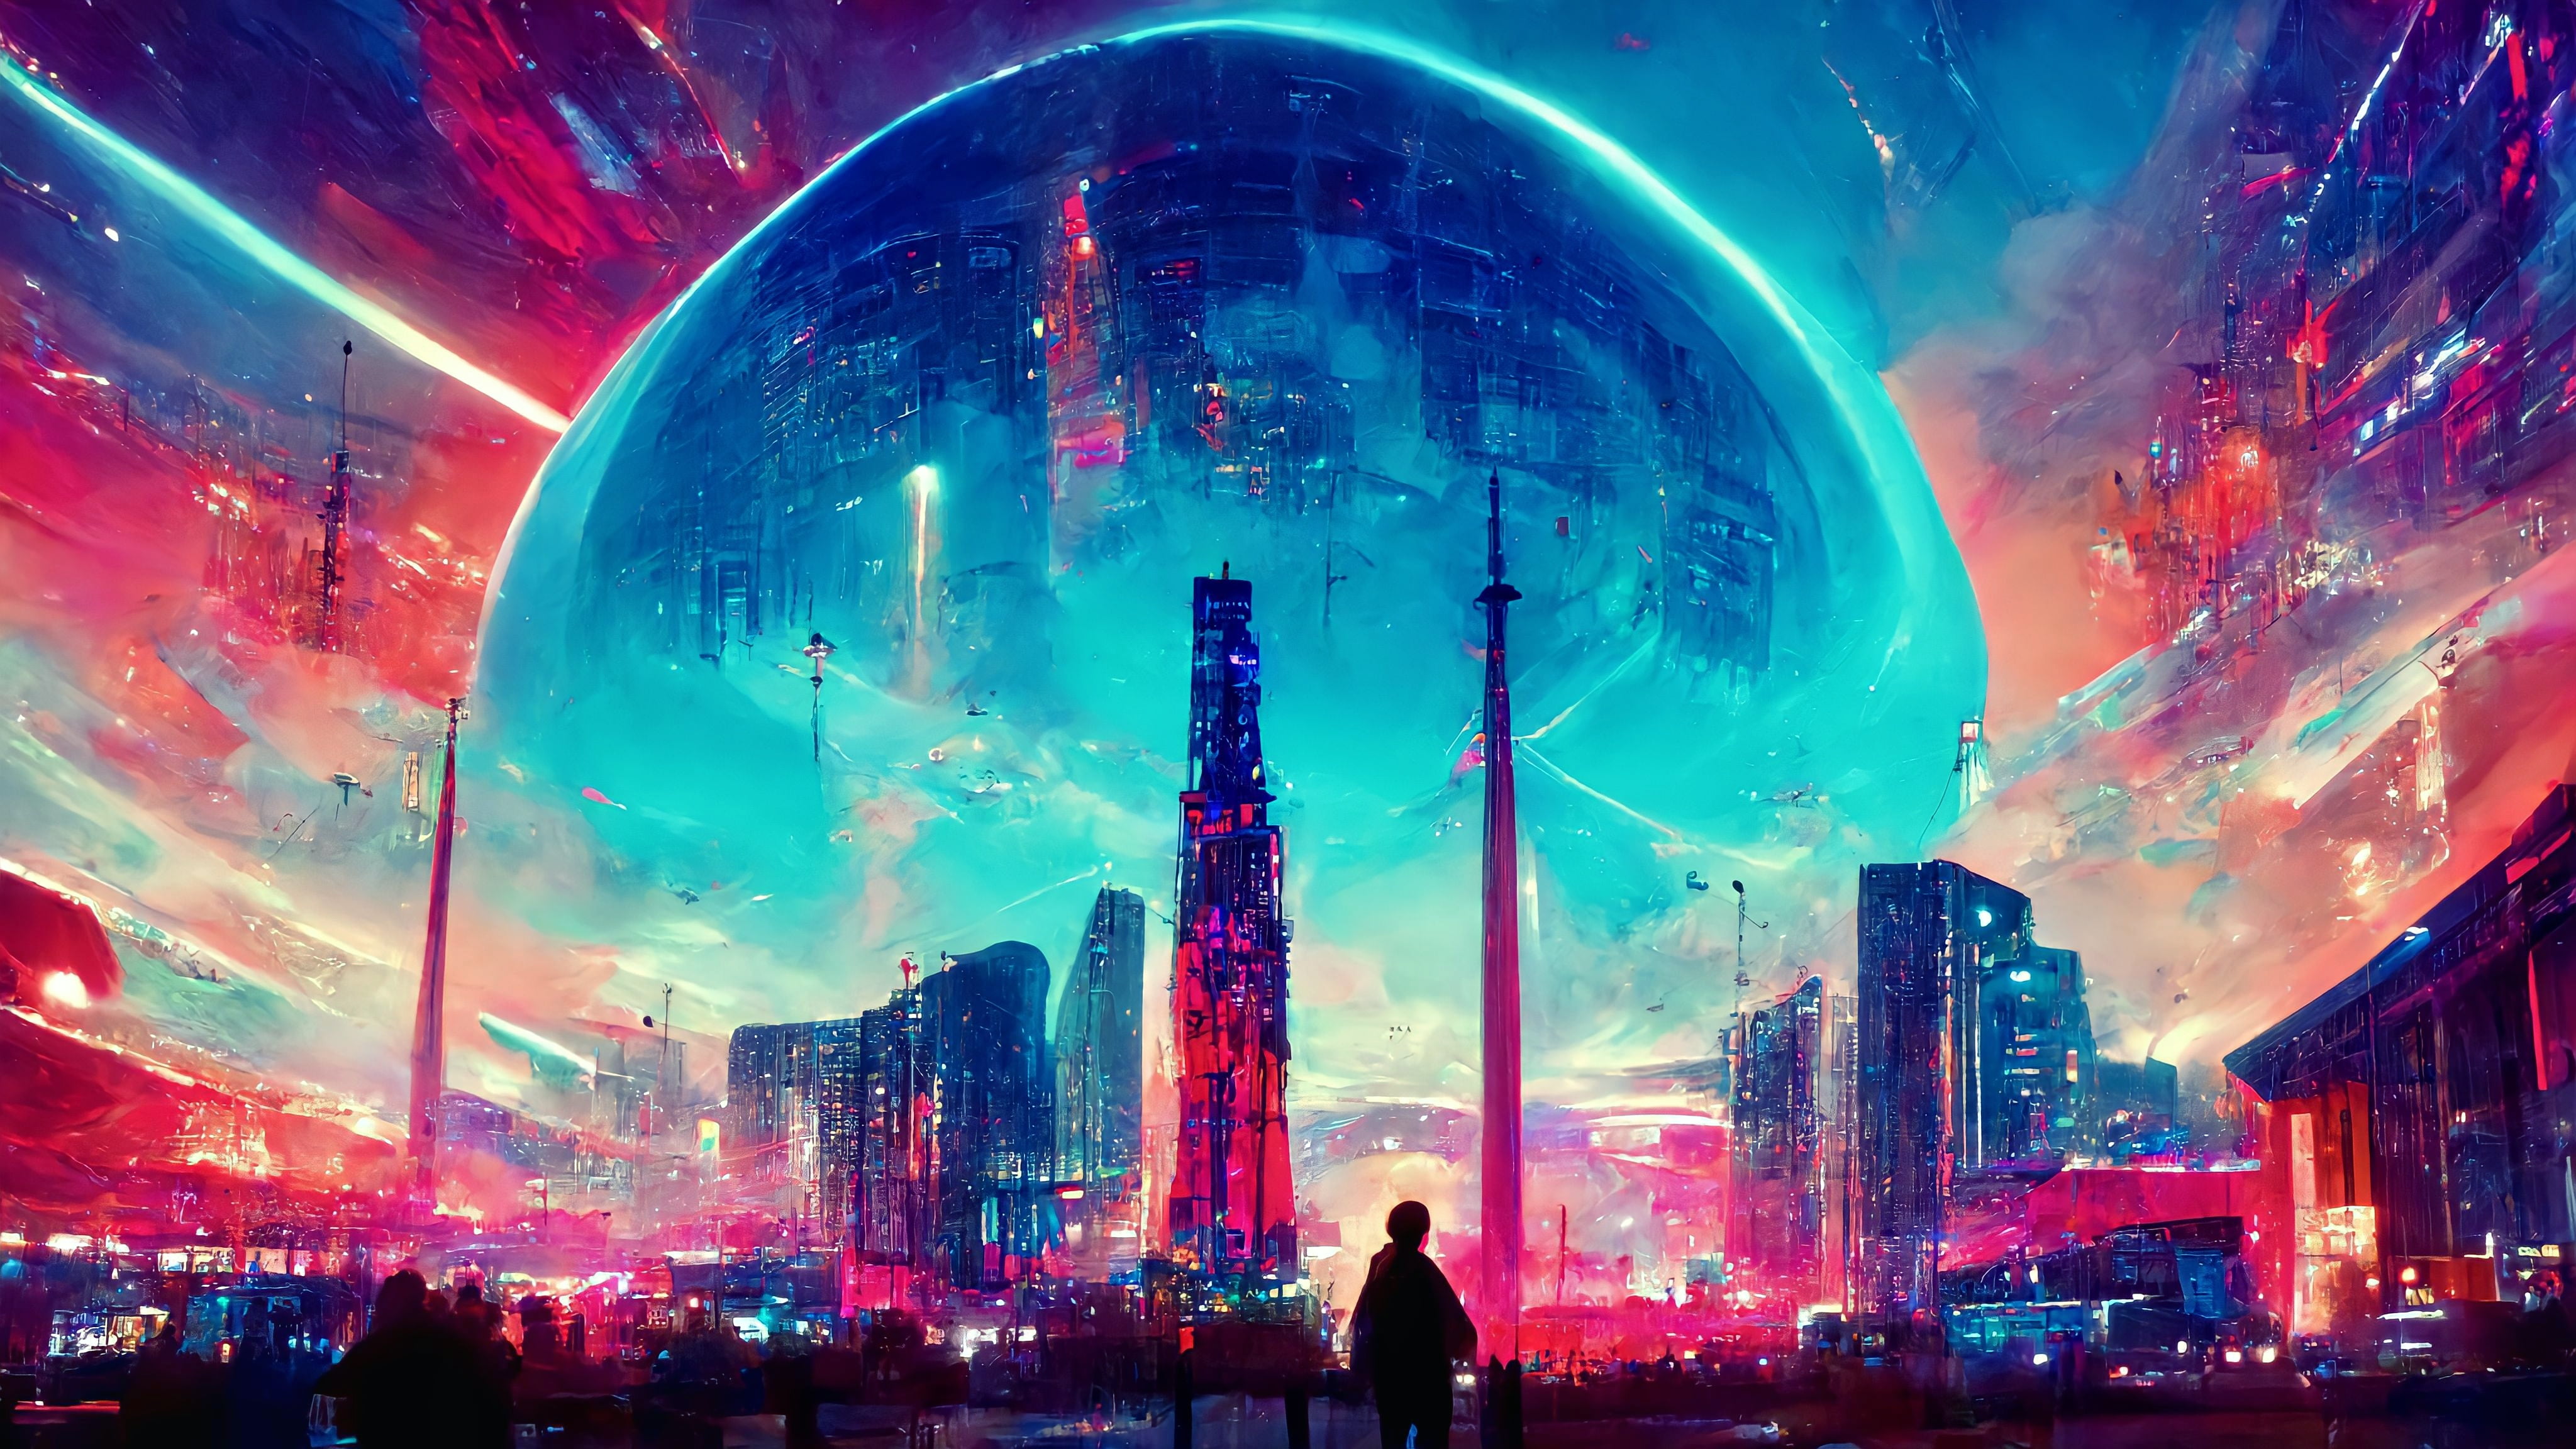 colorful, neon, city, cyberpunk, dome, AI art, futuristic, technology